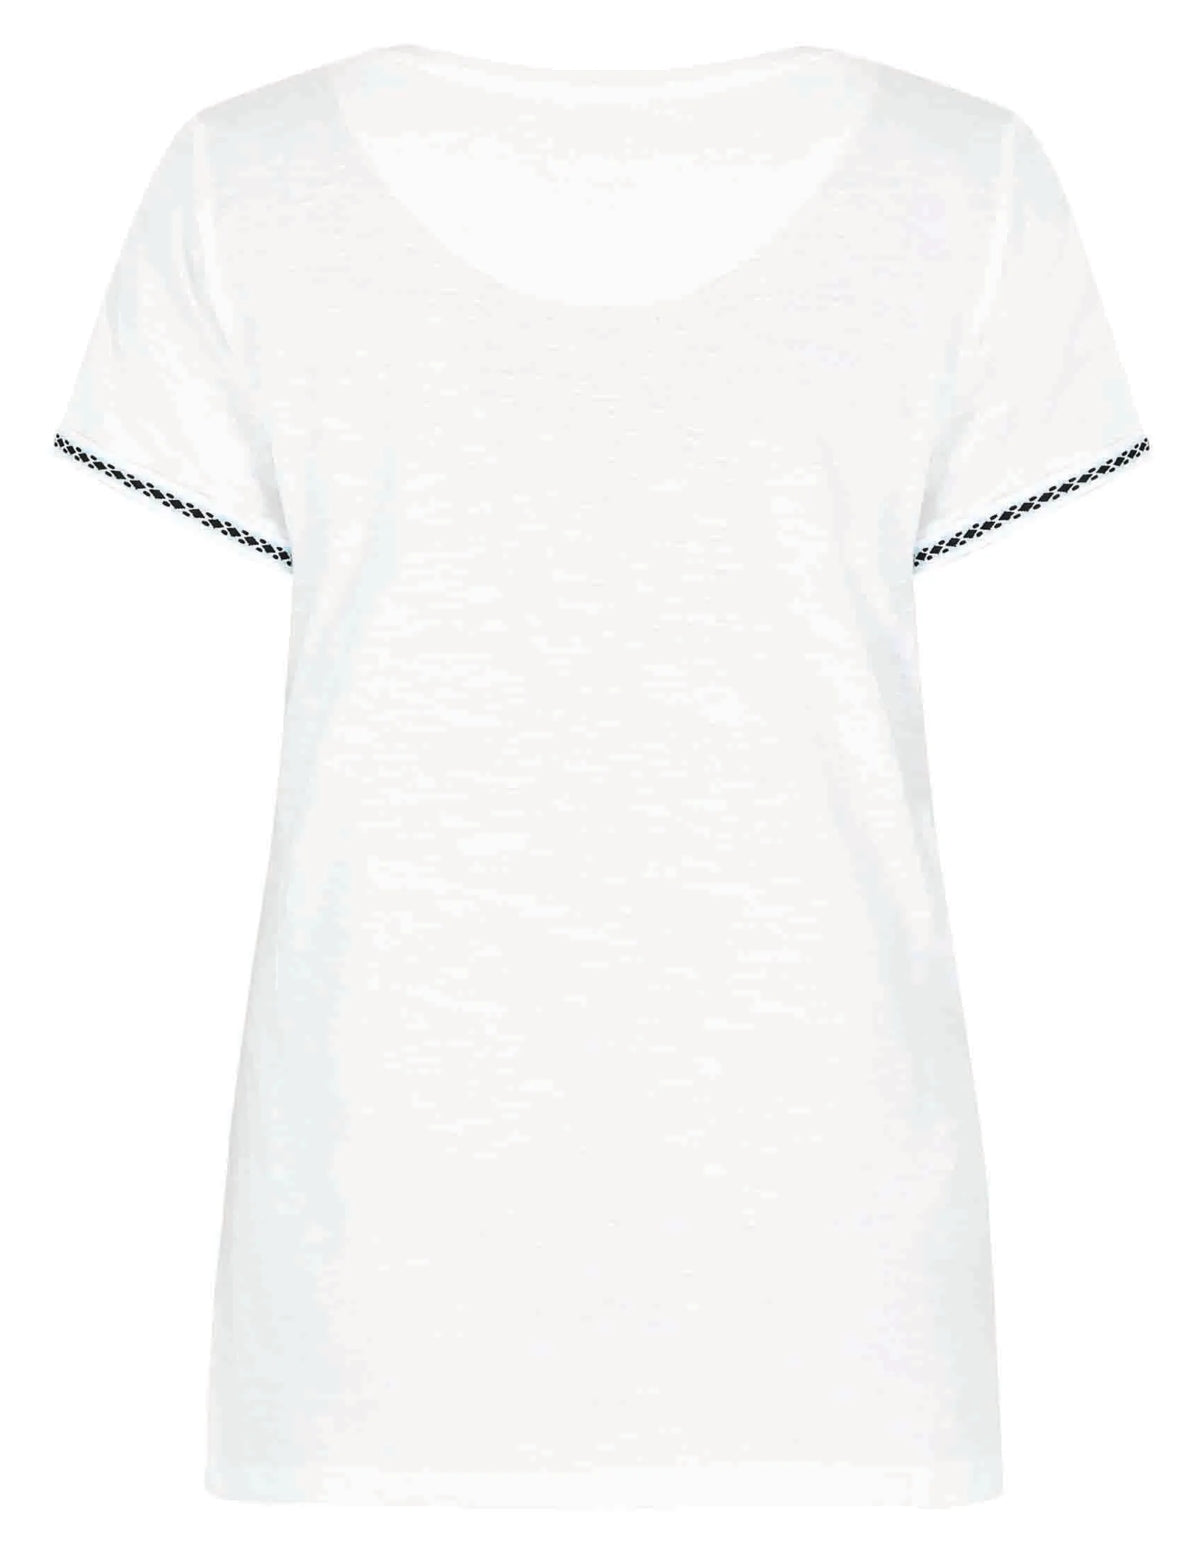 White crew neck short sleeve women's Teya t-shirt from Weird Fish.